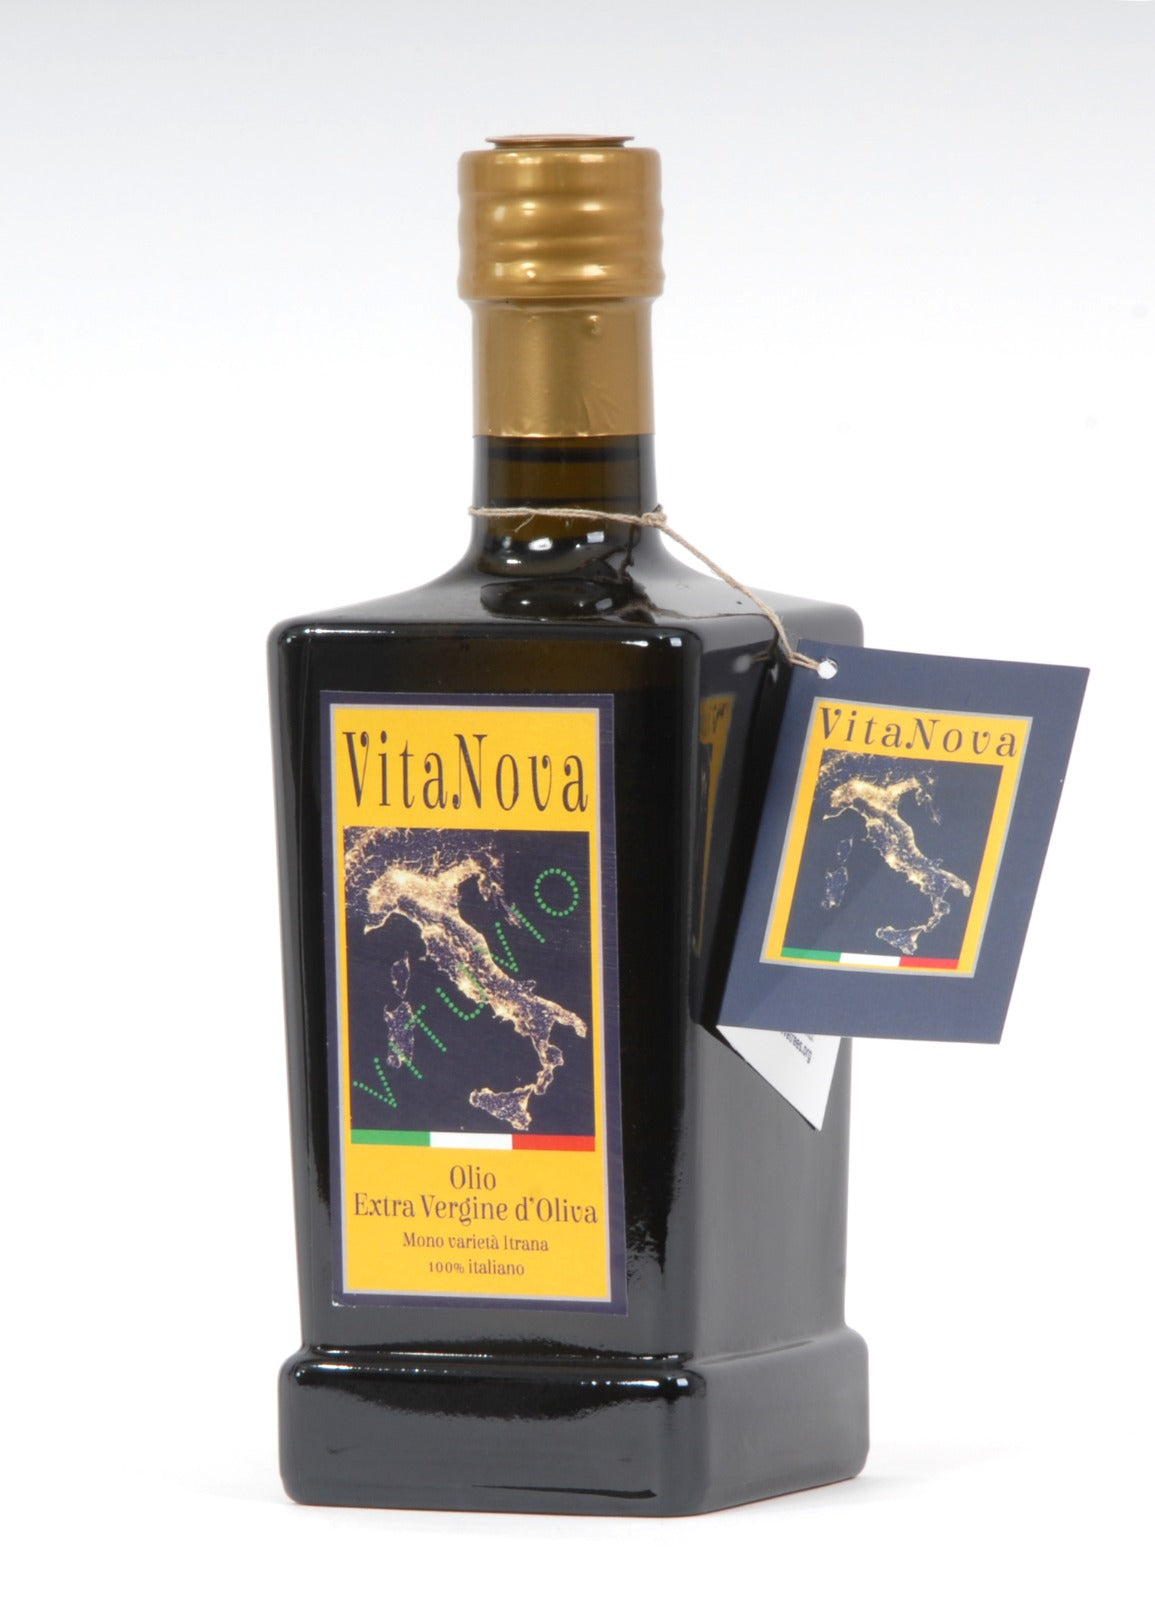 Vitruvio - Olio EVO mono varietà Itrana, alti polifenoli